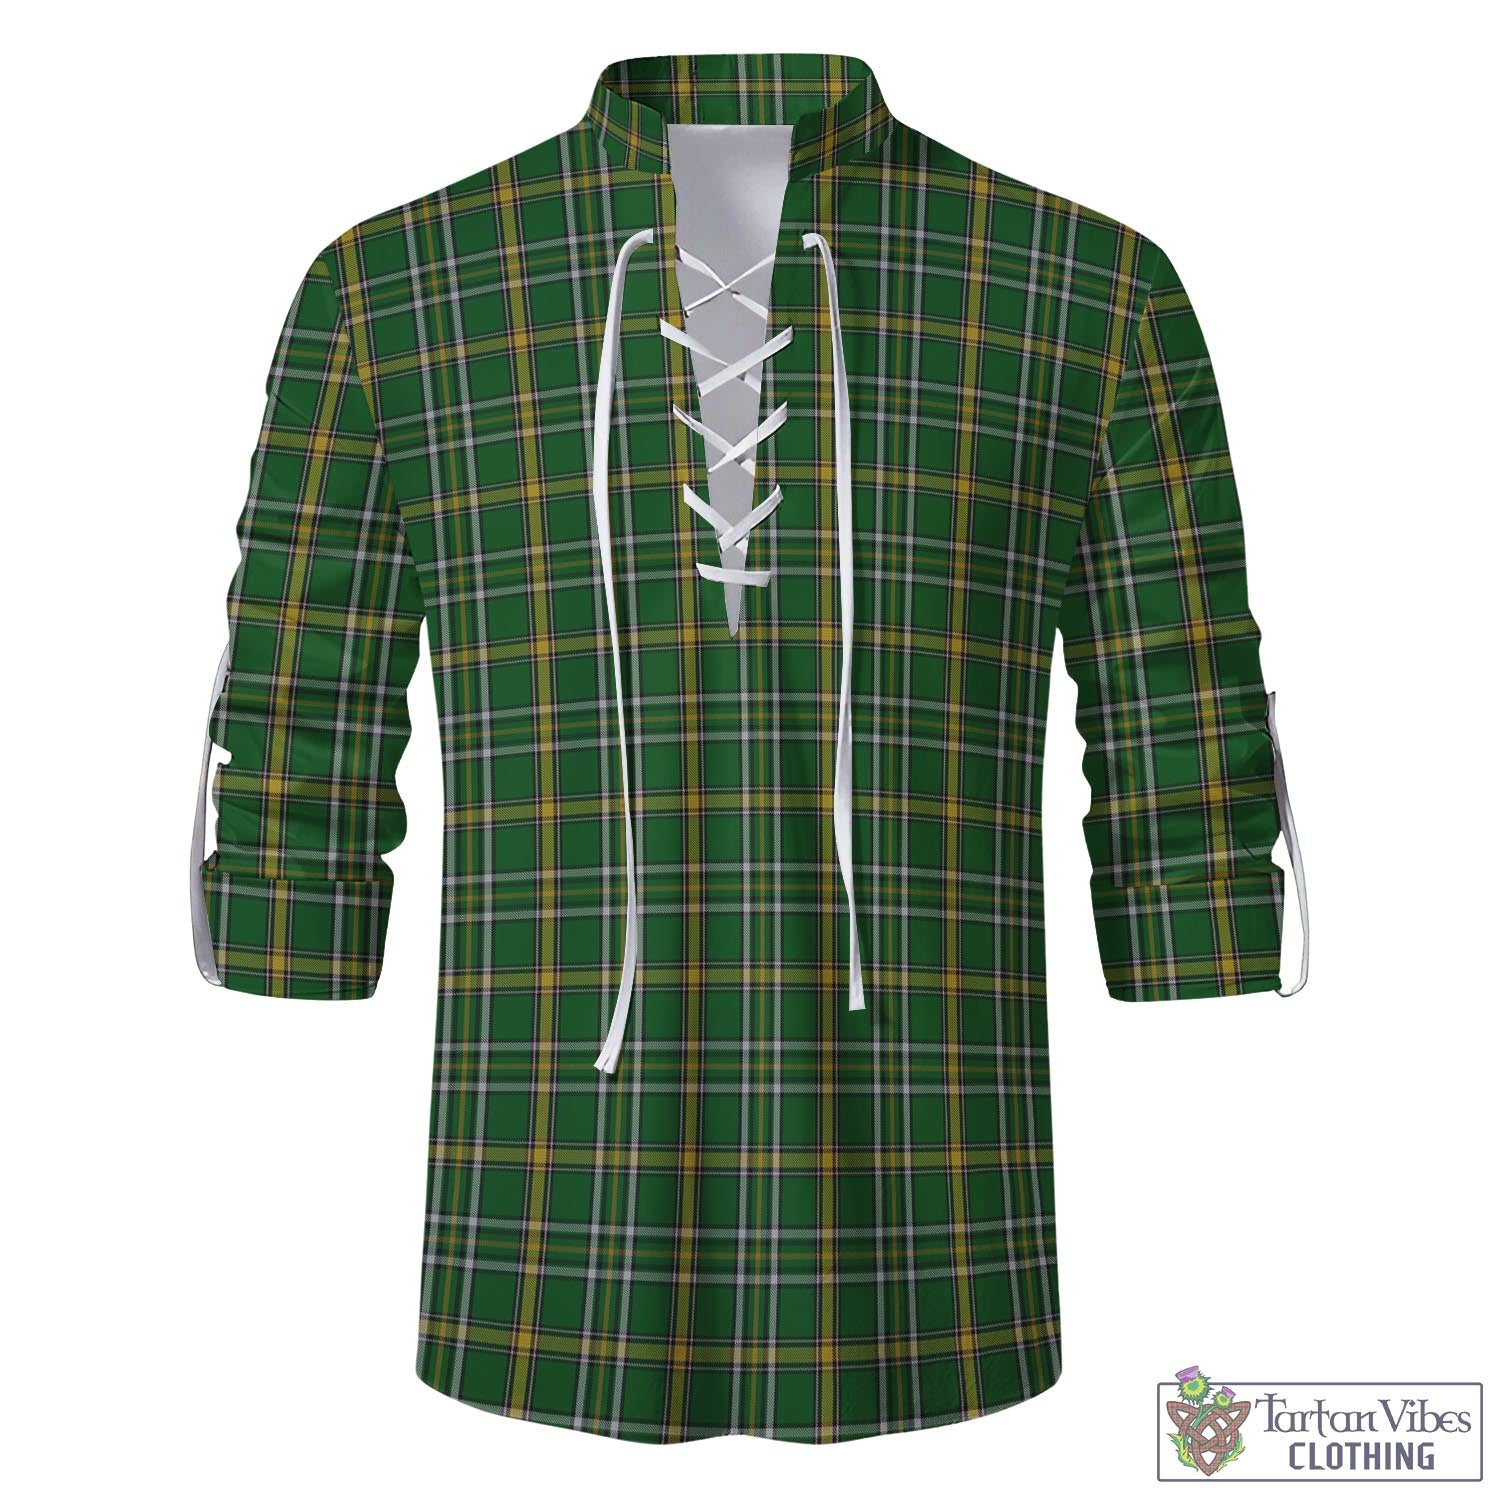 Tartan Vibes Clothing Offaly County Ireland Tartan Men's Scottish Traditional Jacobite Ghillie Kilt Shirt